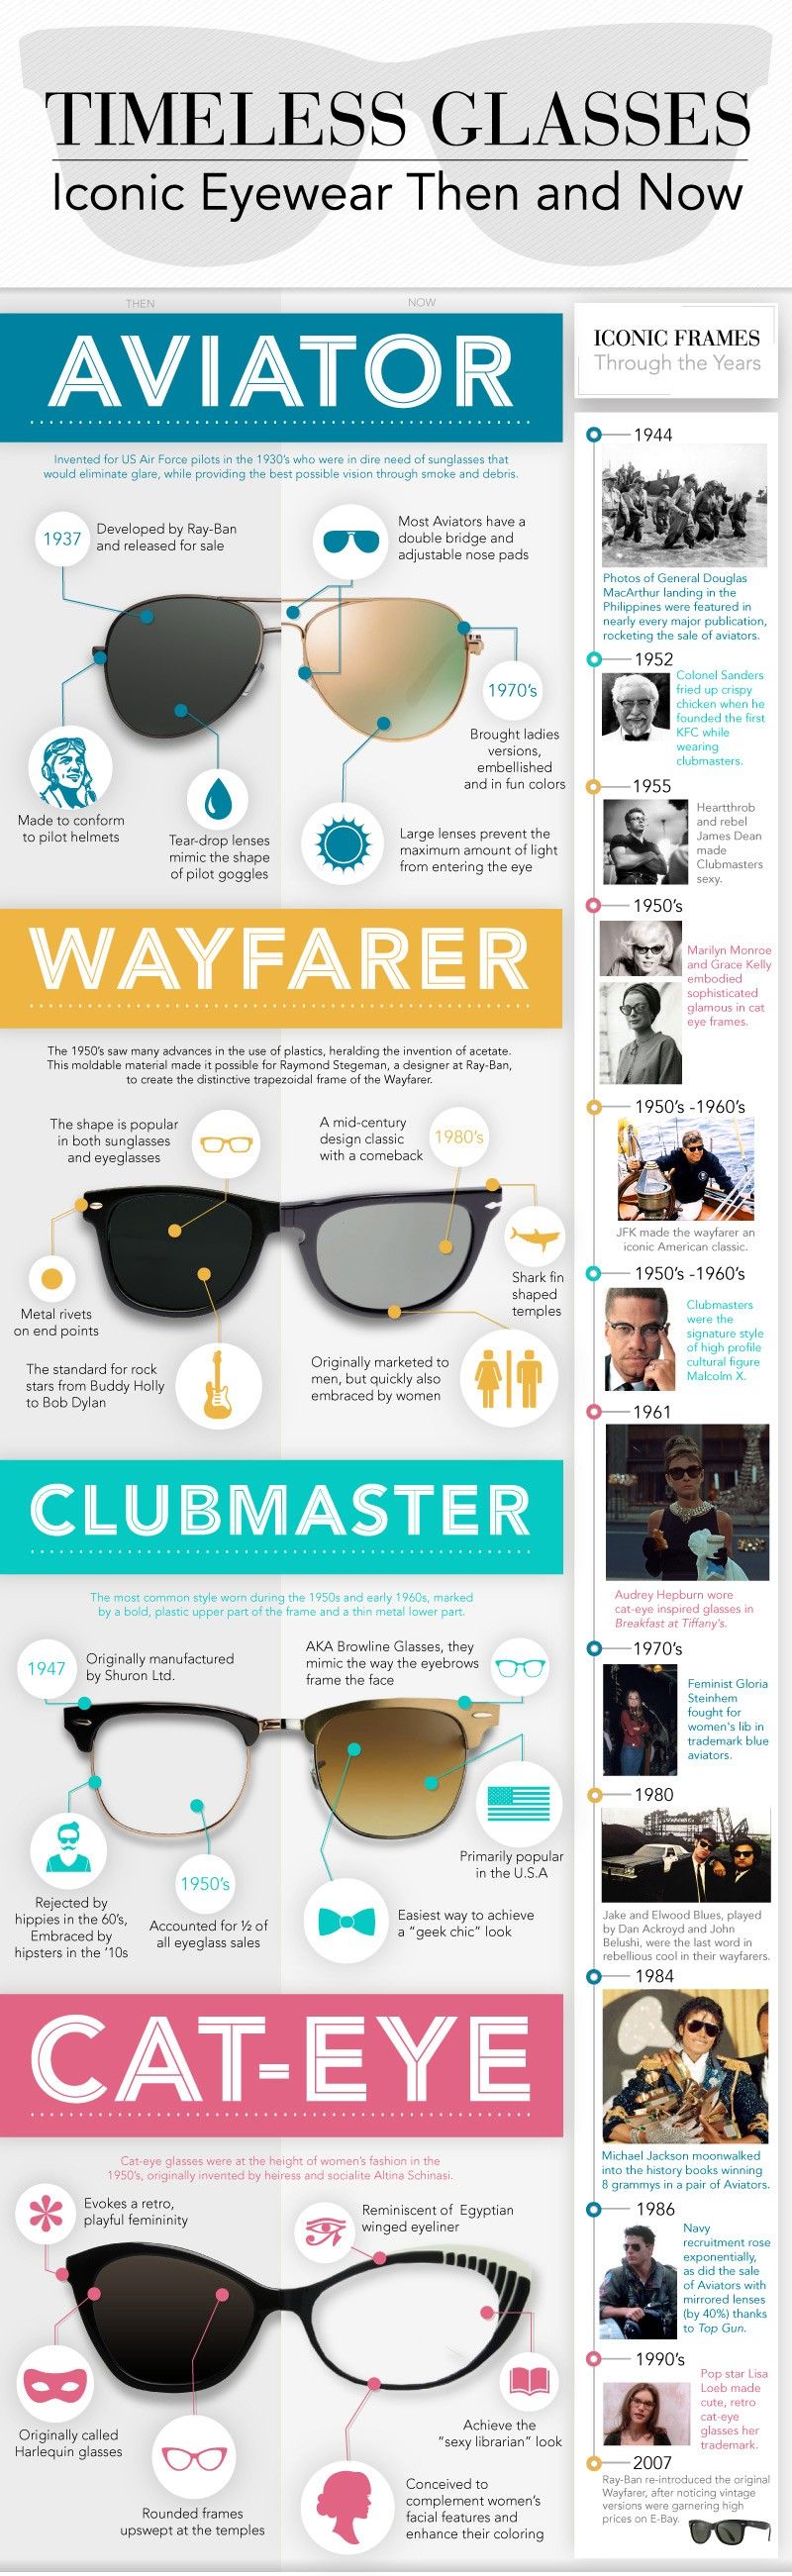 wayfarer shape sunglasses